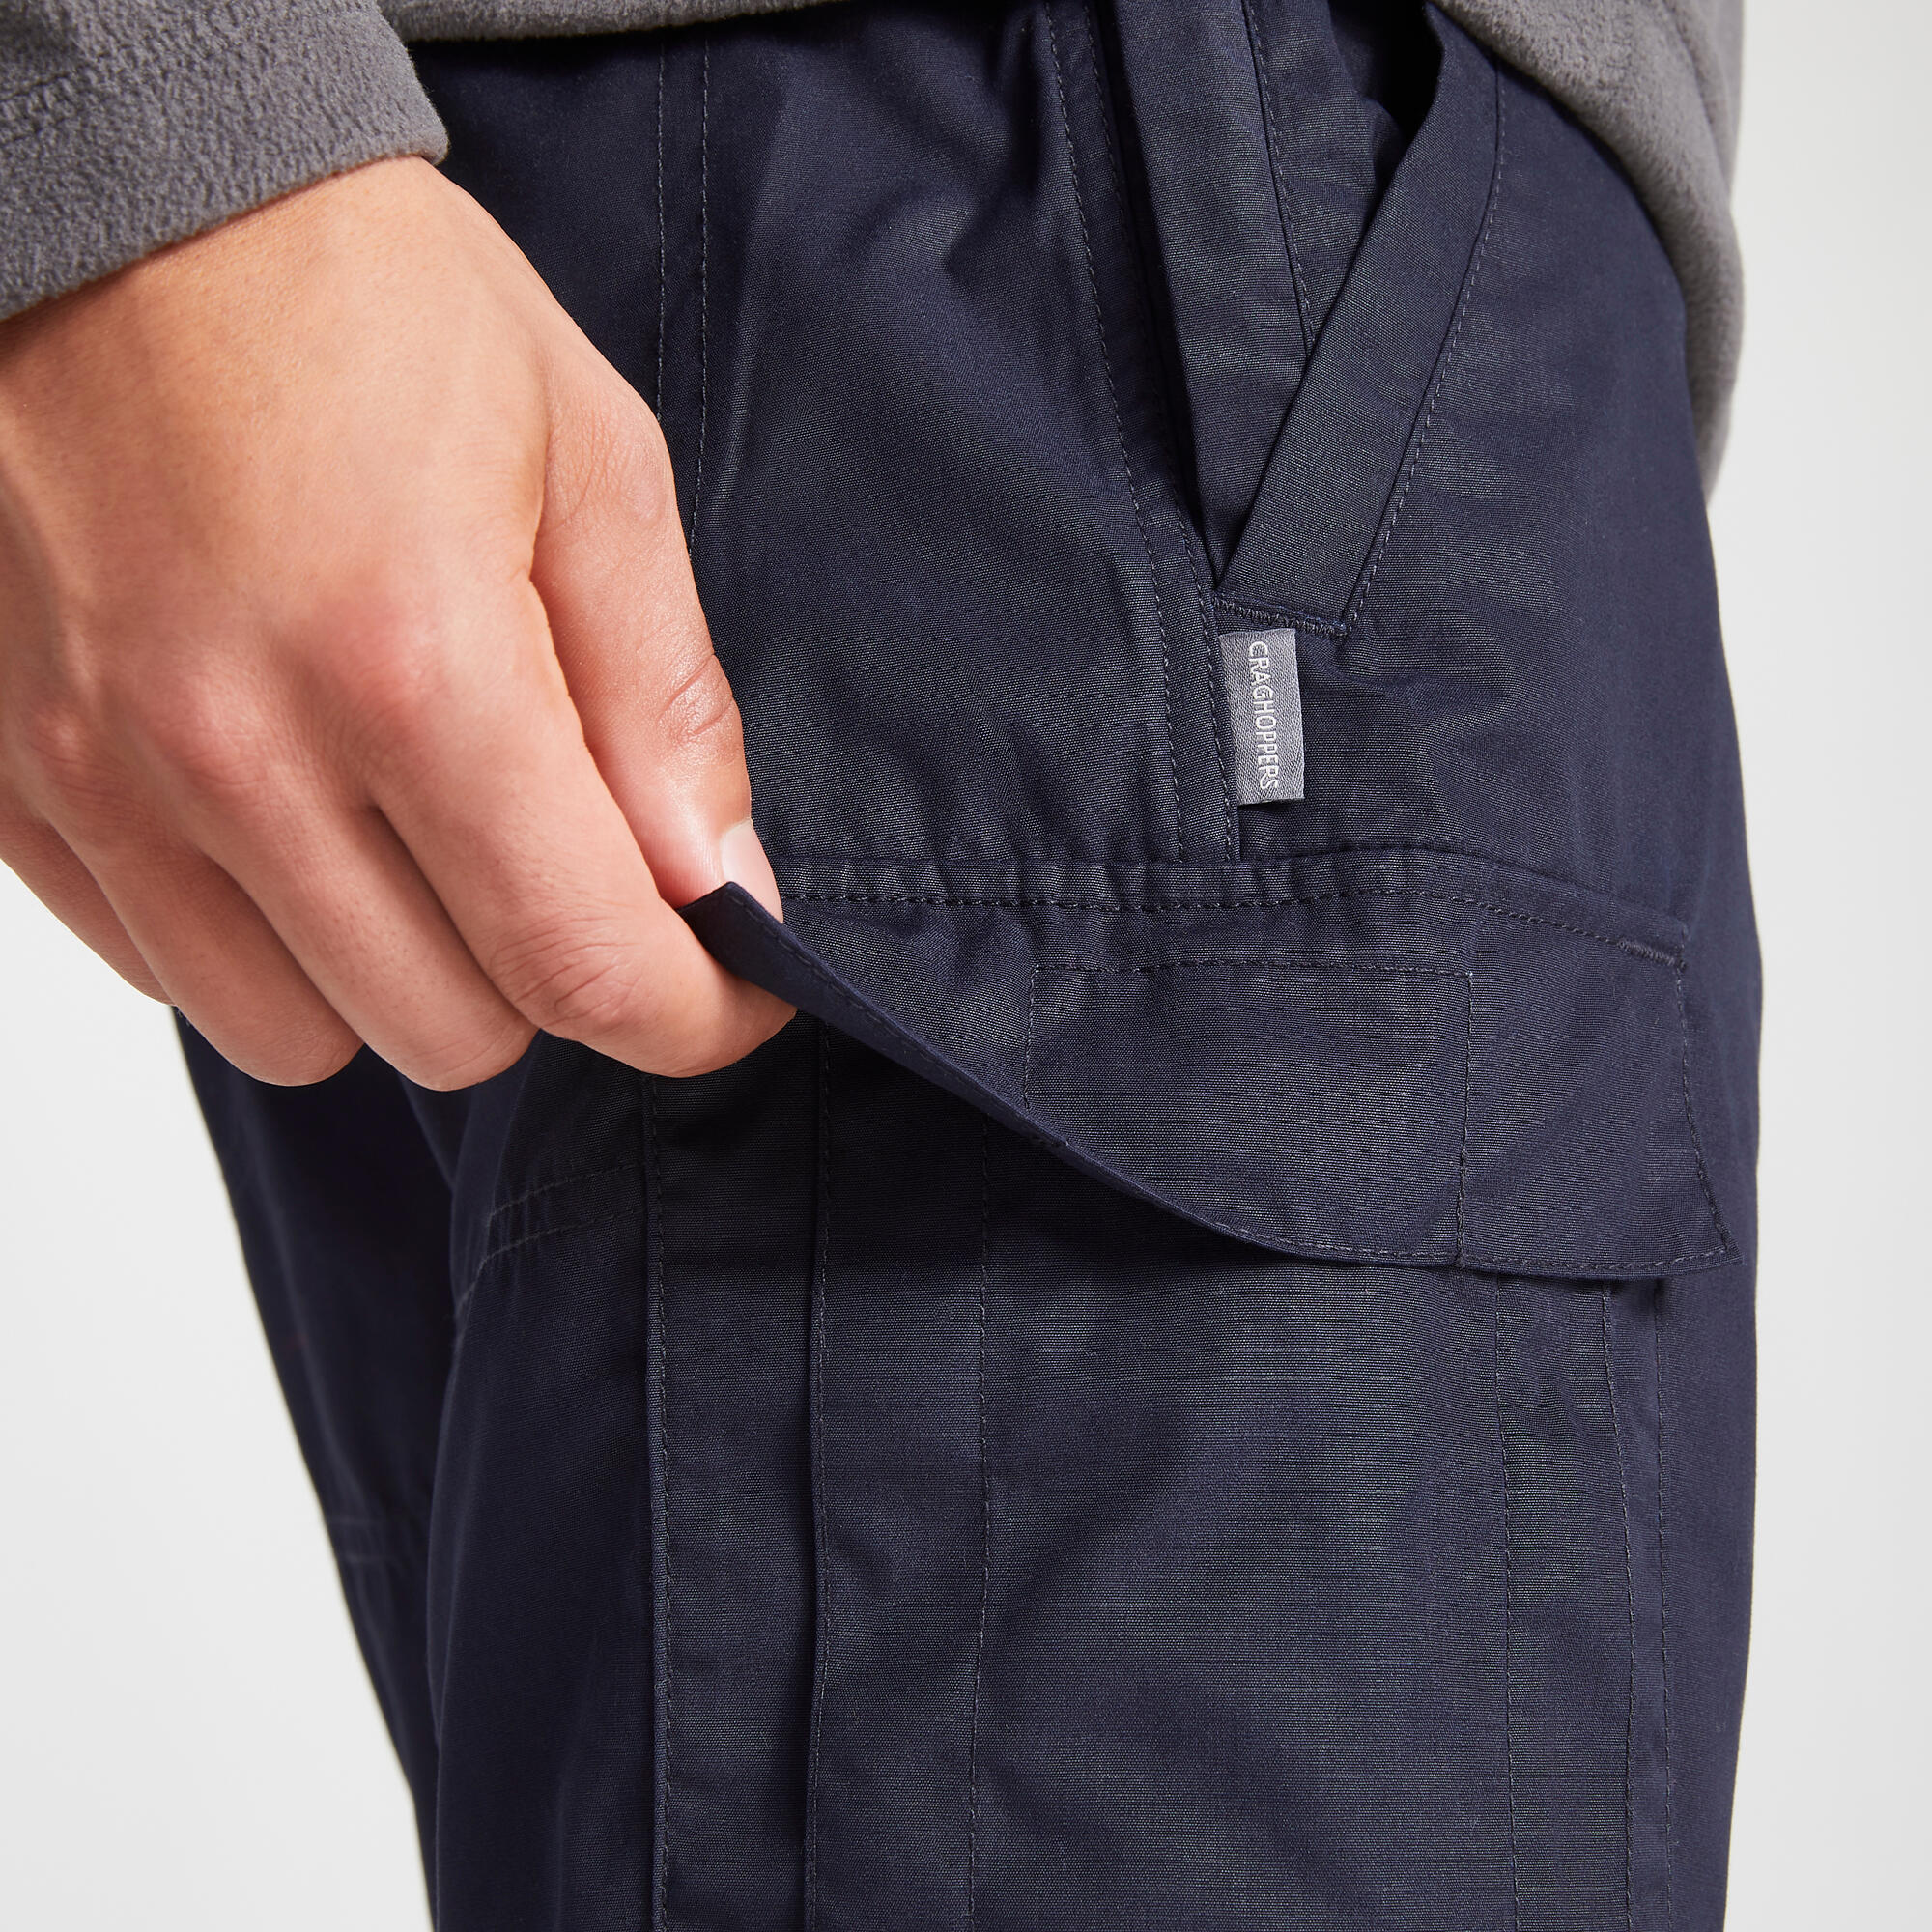 Men's Expert Kiwi Tailored Convertible Trousers 2/5